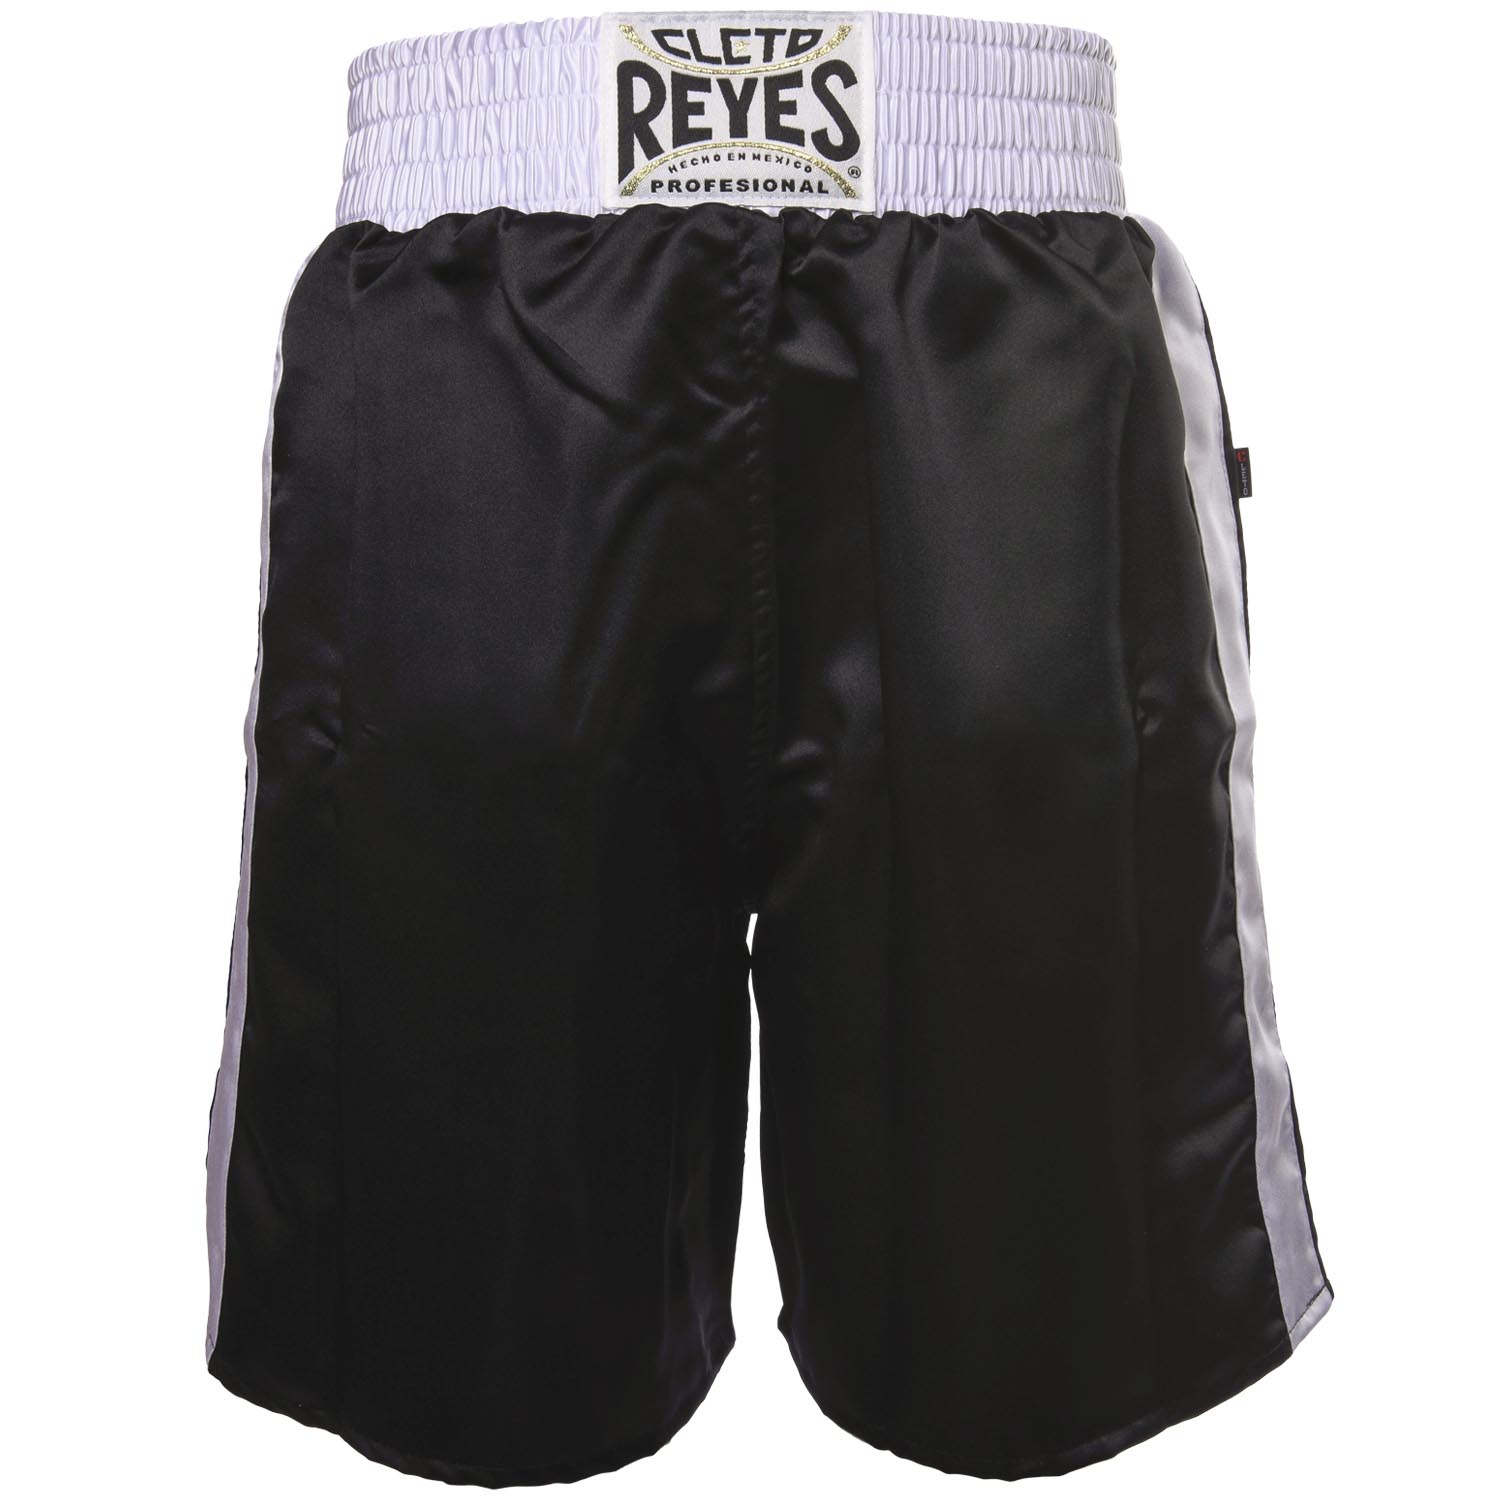 Cleto Reyes Boxhosen, schwarz-weiß